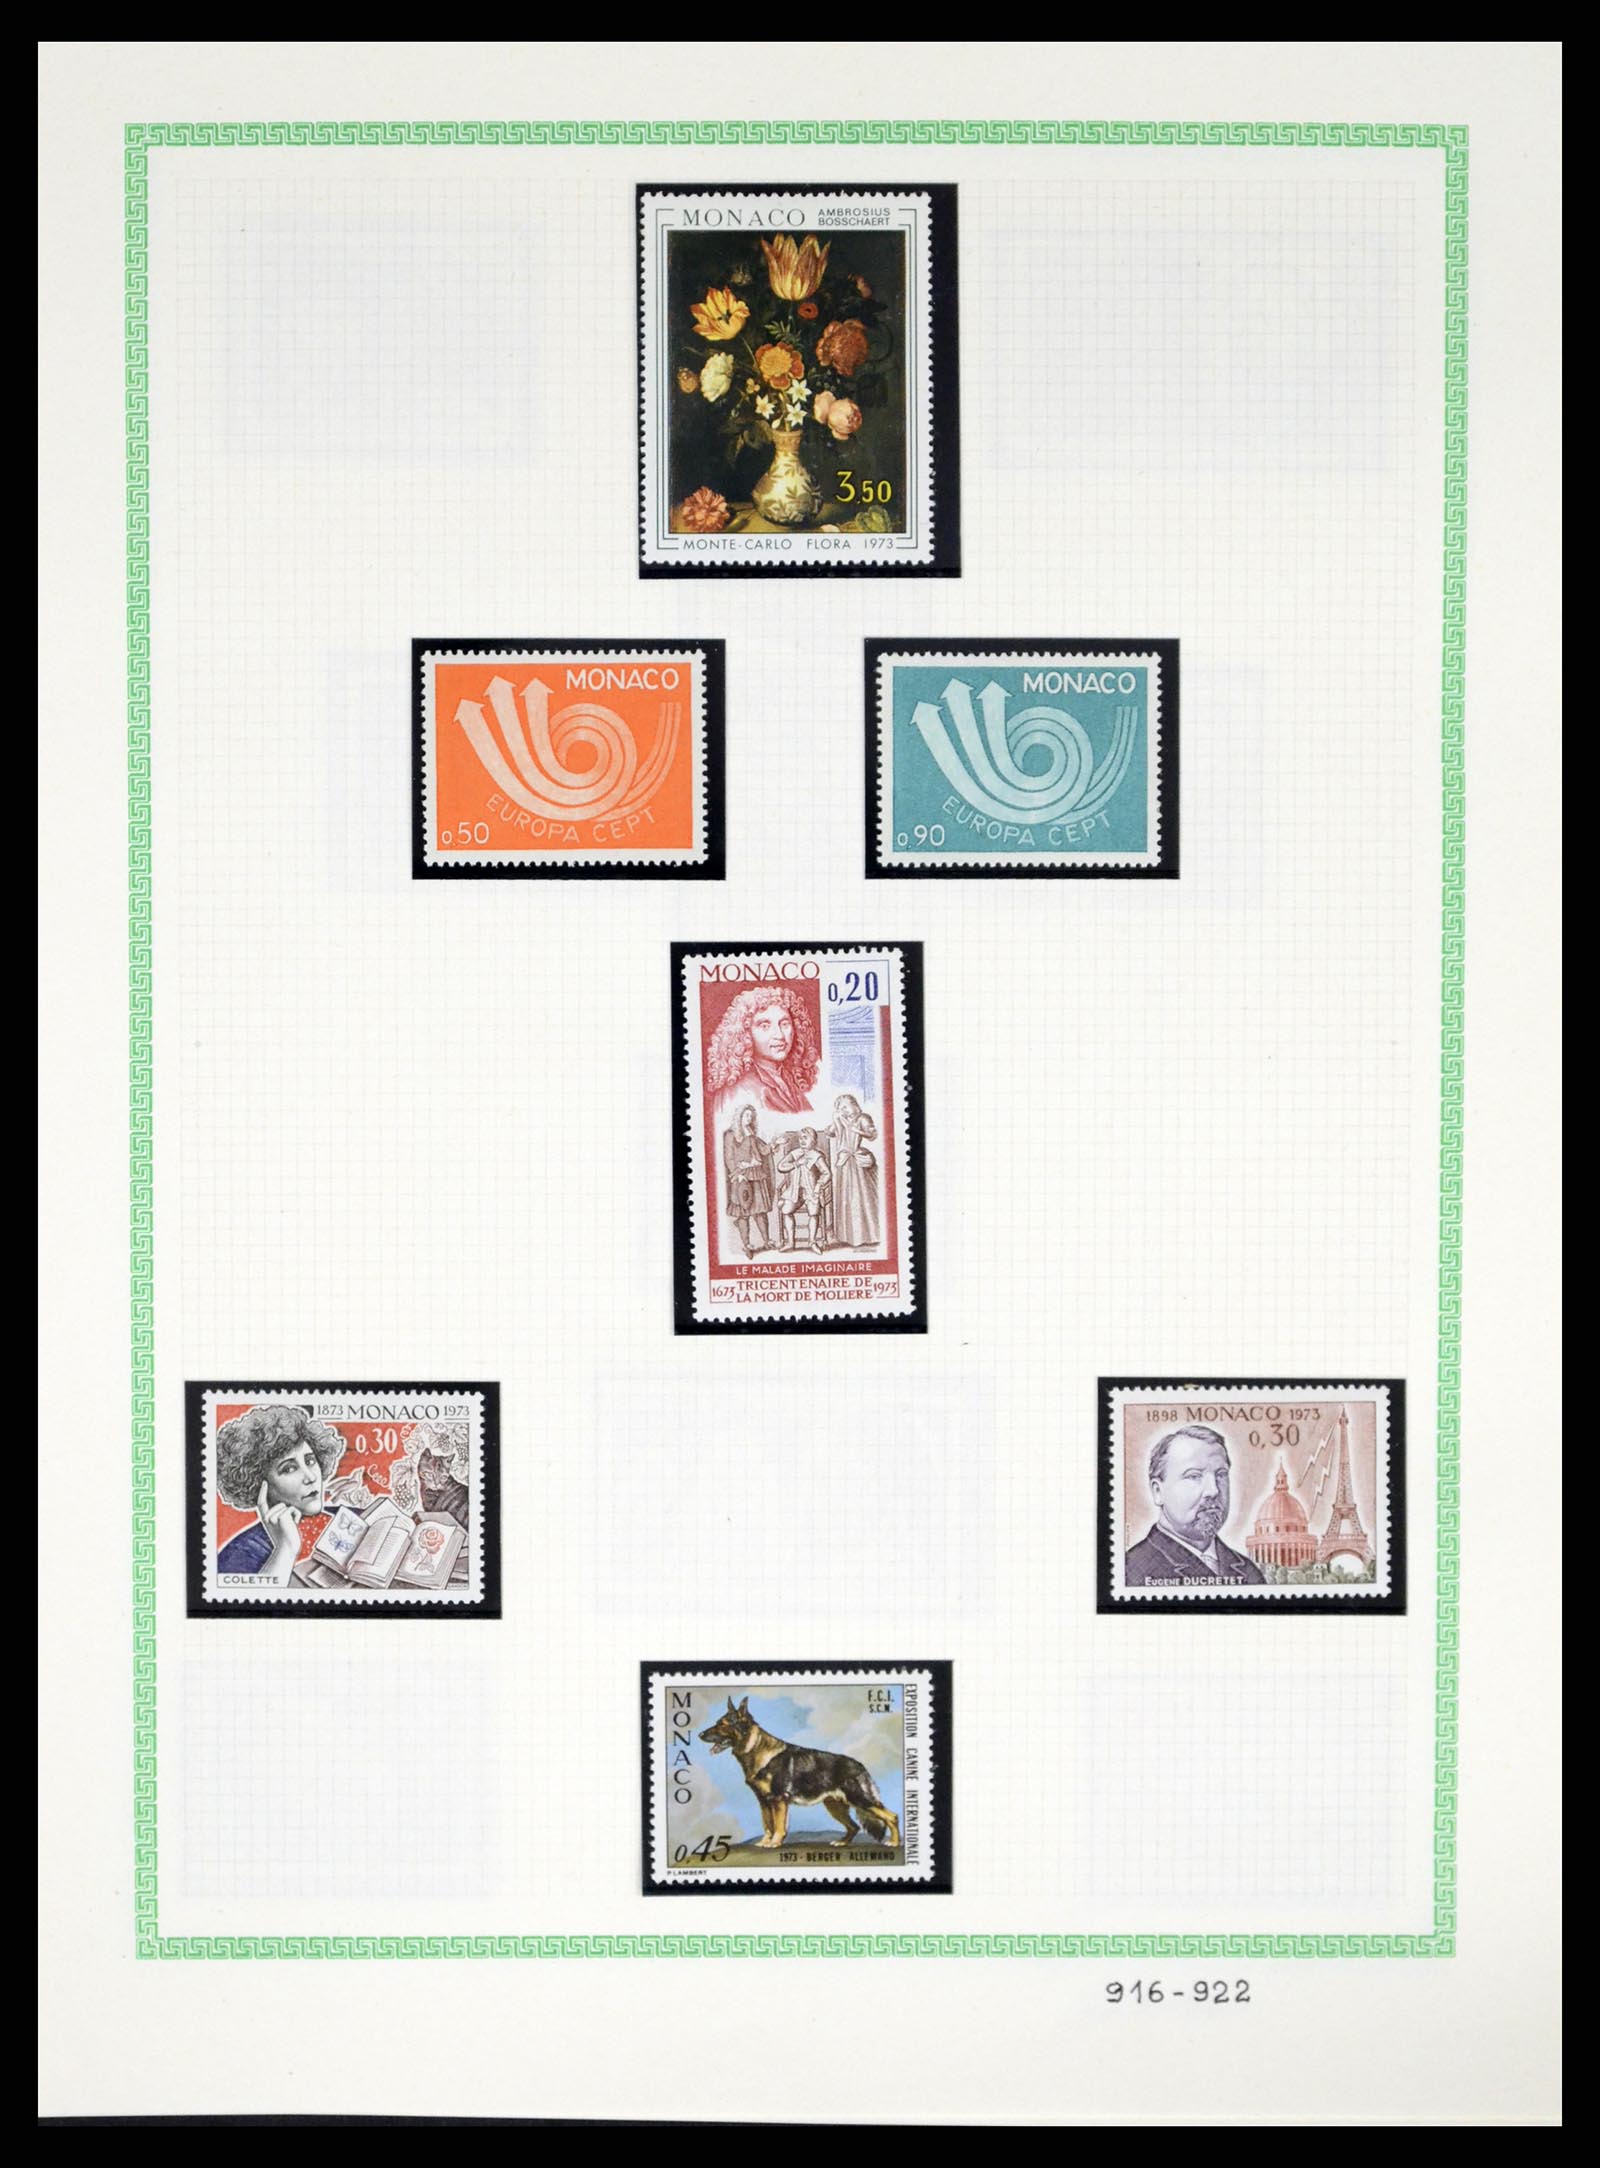 37380 093 - Stamp collection 37380 Monaco 1921-2015.